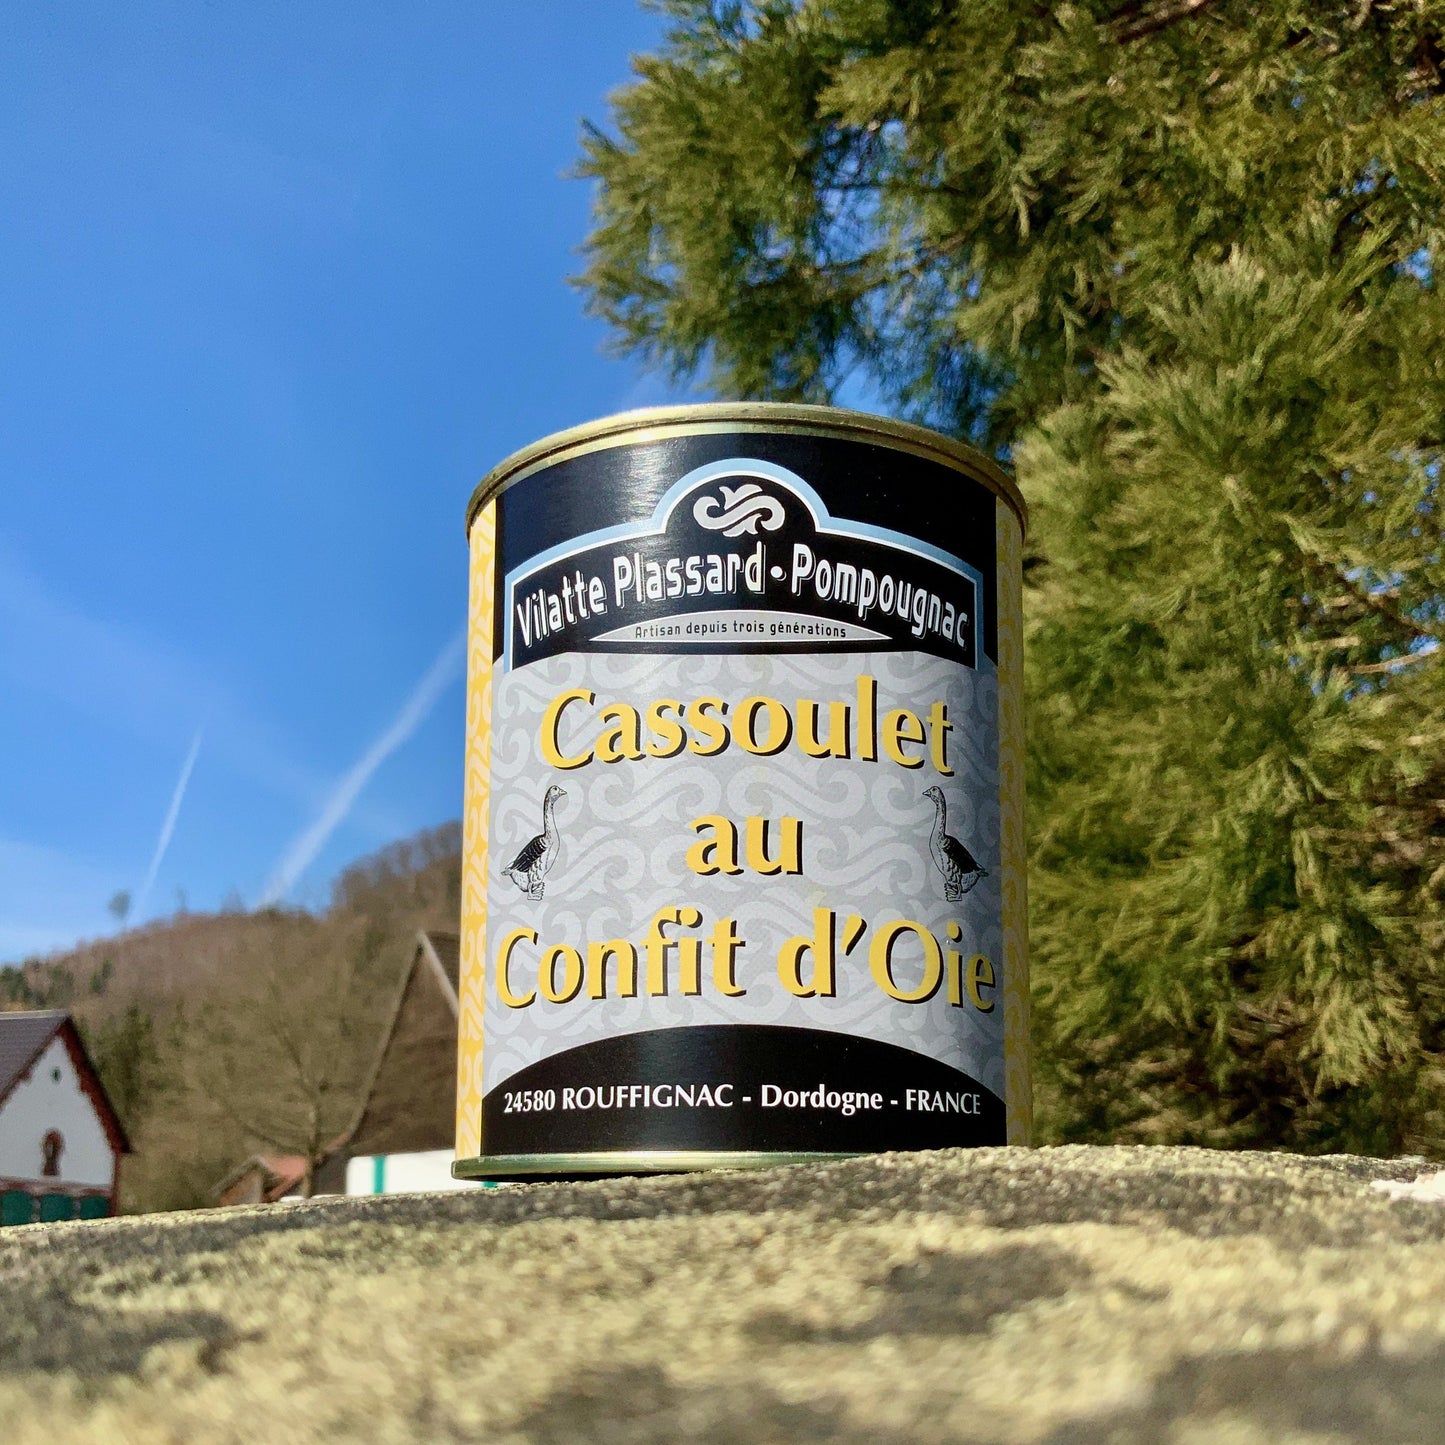 Cassoulet * Bohnen-Gänse-Eintopf, für ca. 4-5 Personen, 1400g - Perigord-Import